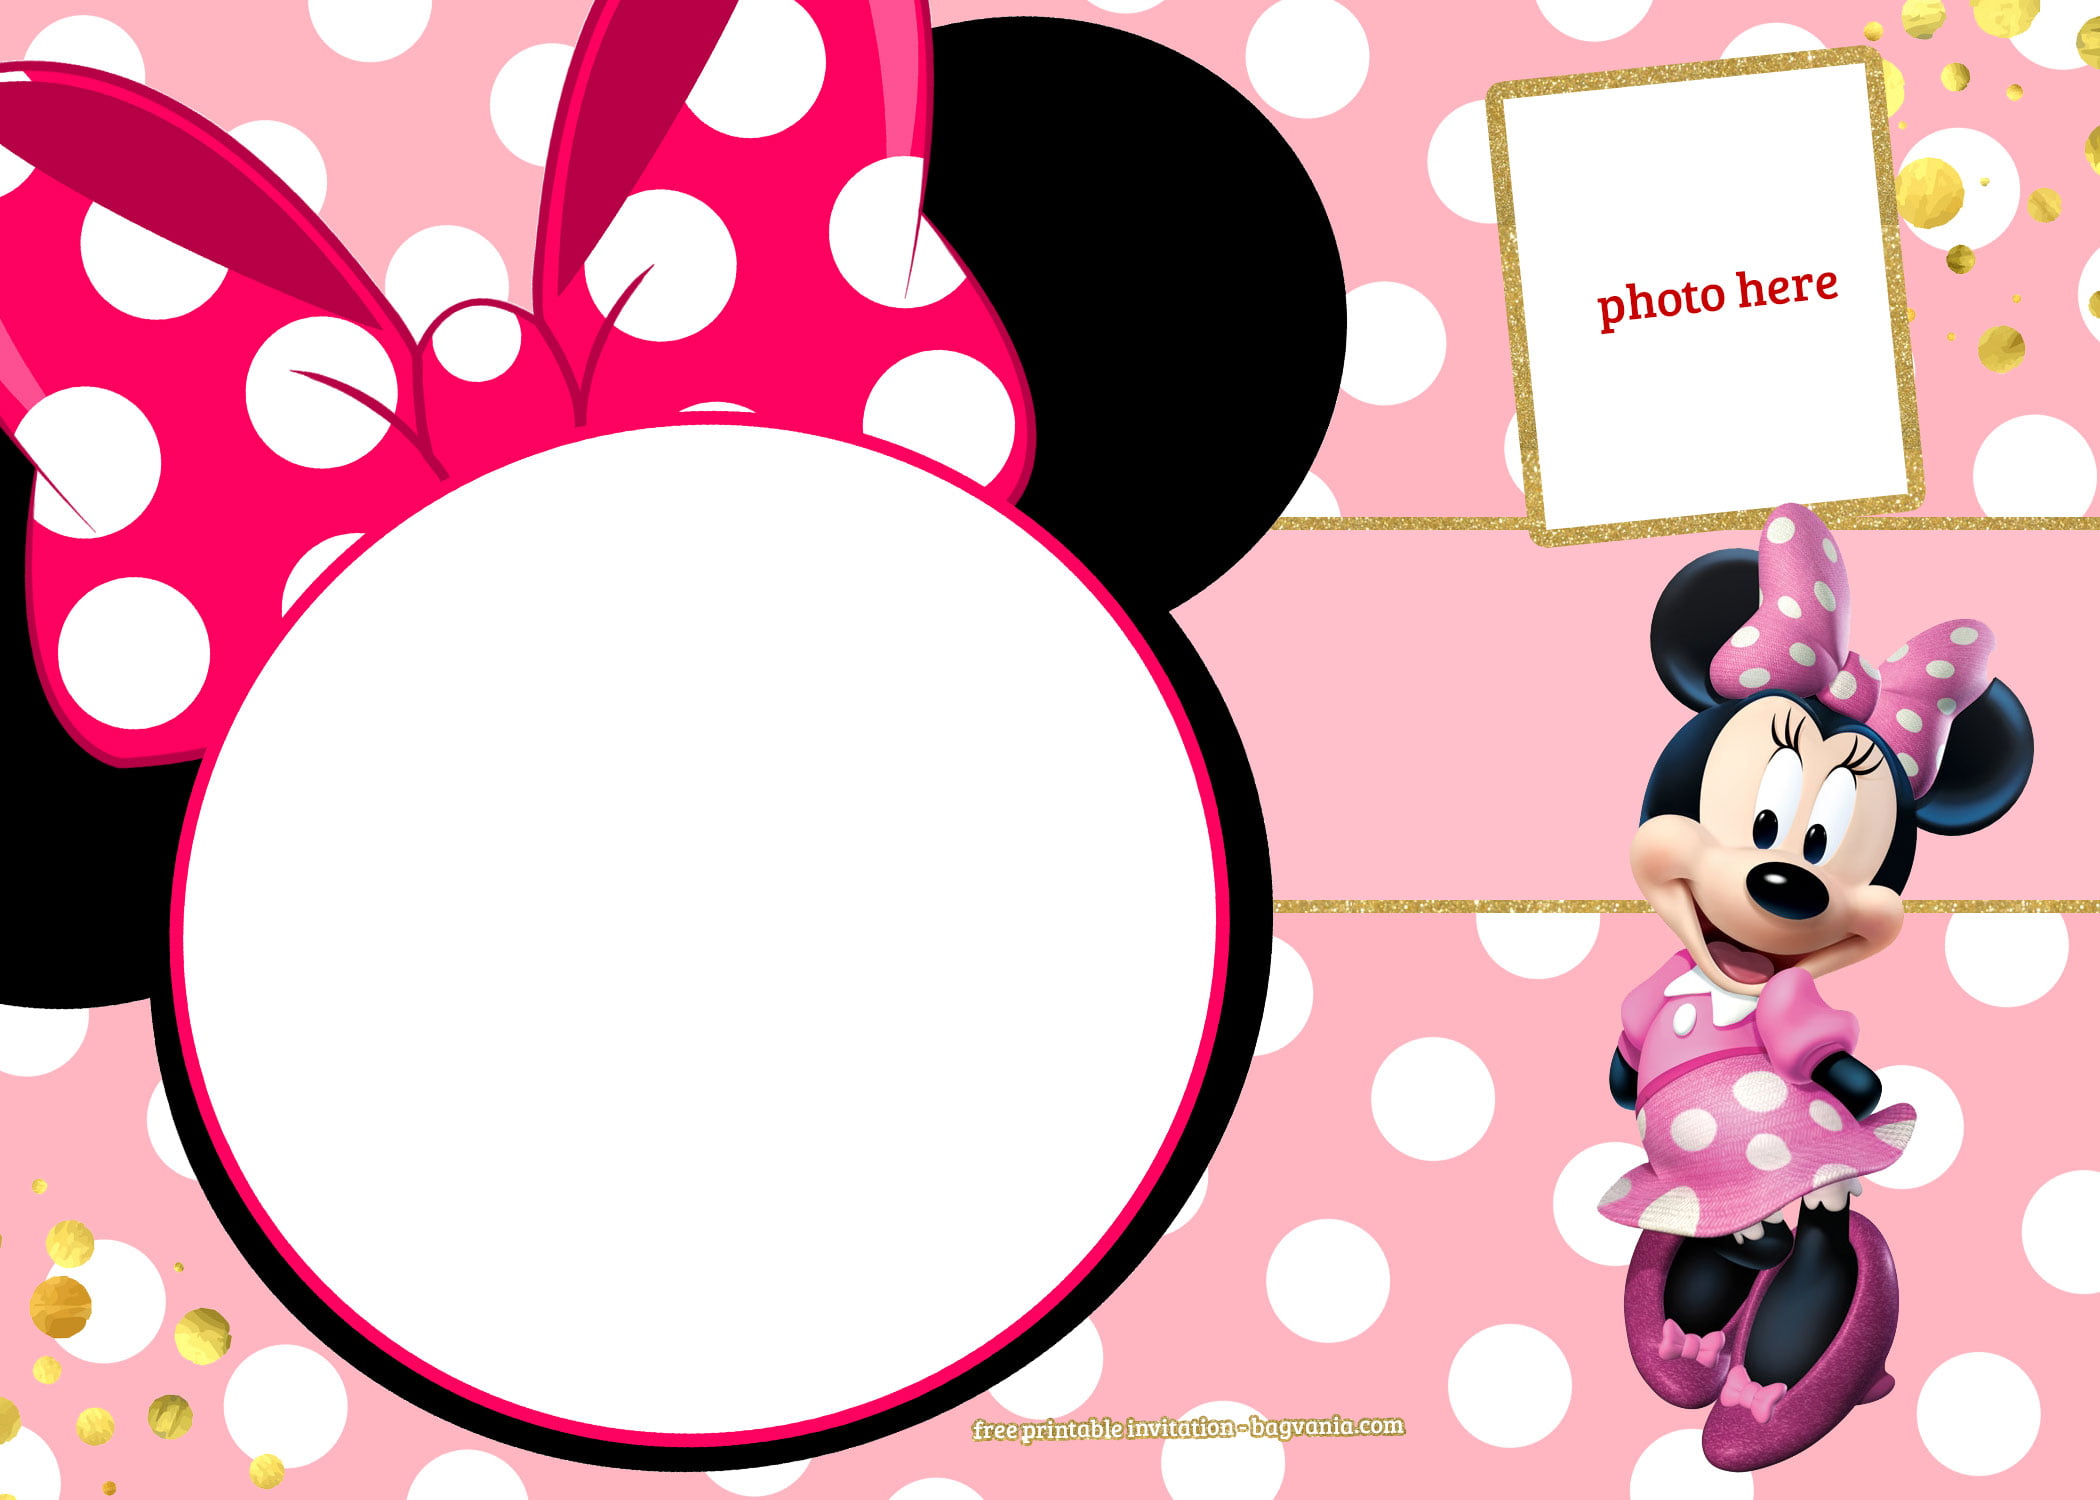 Minnie Mouse Blank Invitation